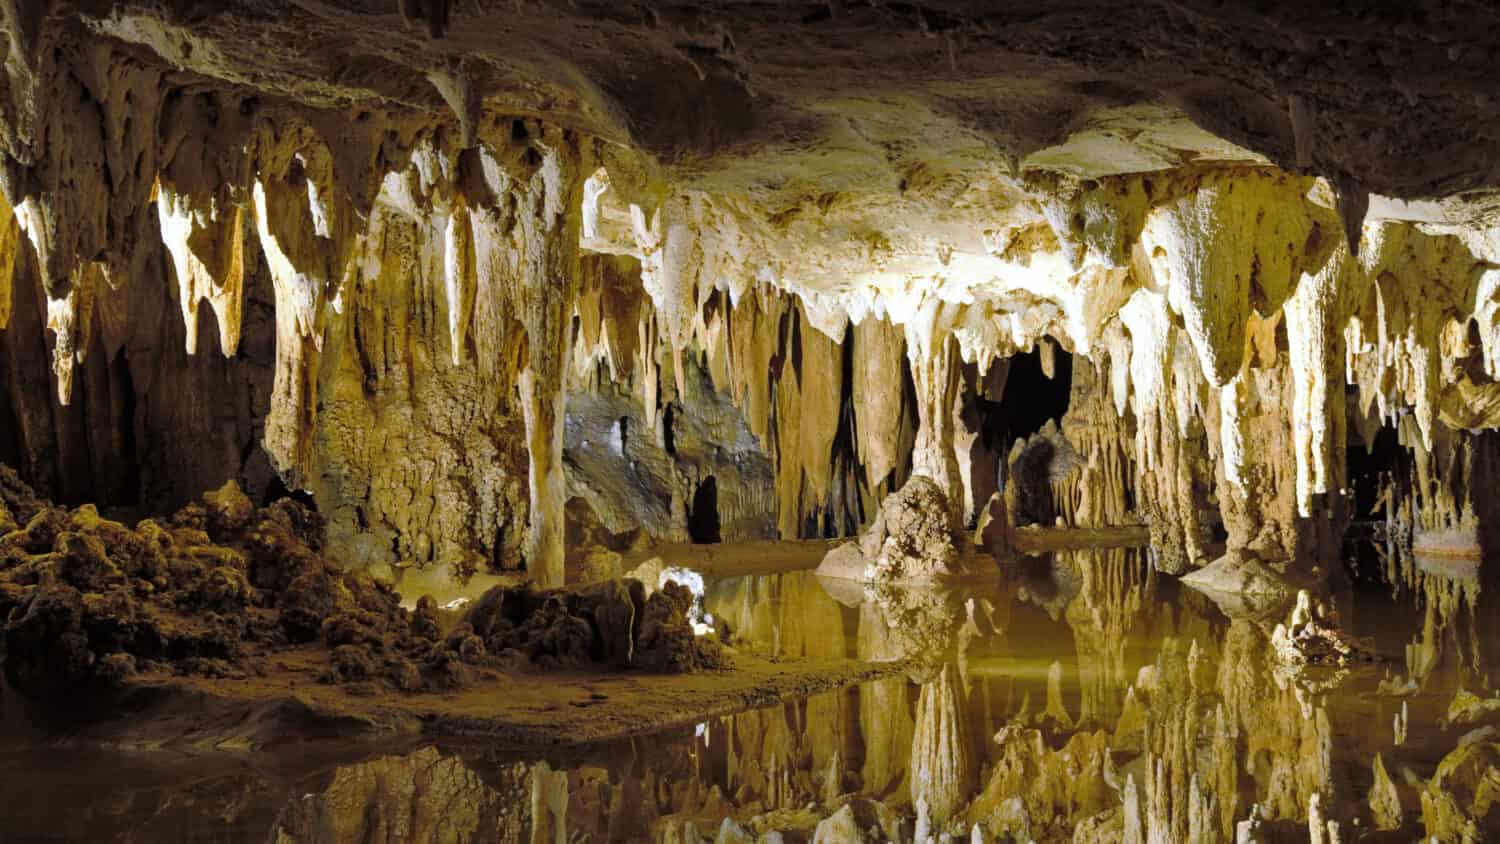 Luray Cavern Lake Arrow HeadMassive underground lair with tall natural columns, colorful stalactites & brick walkways. Virginia, USA